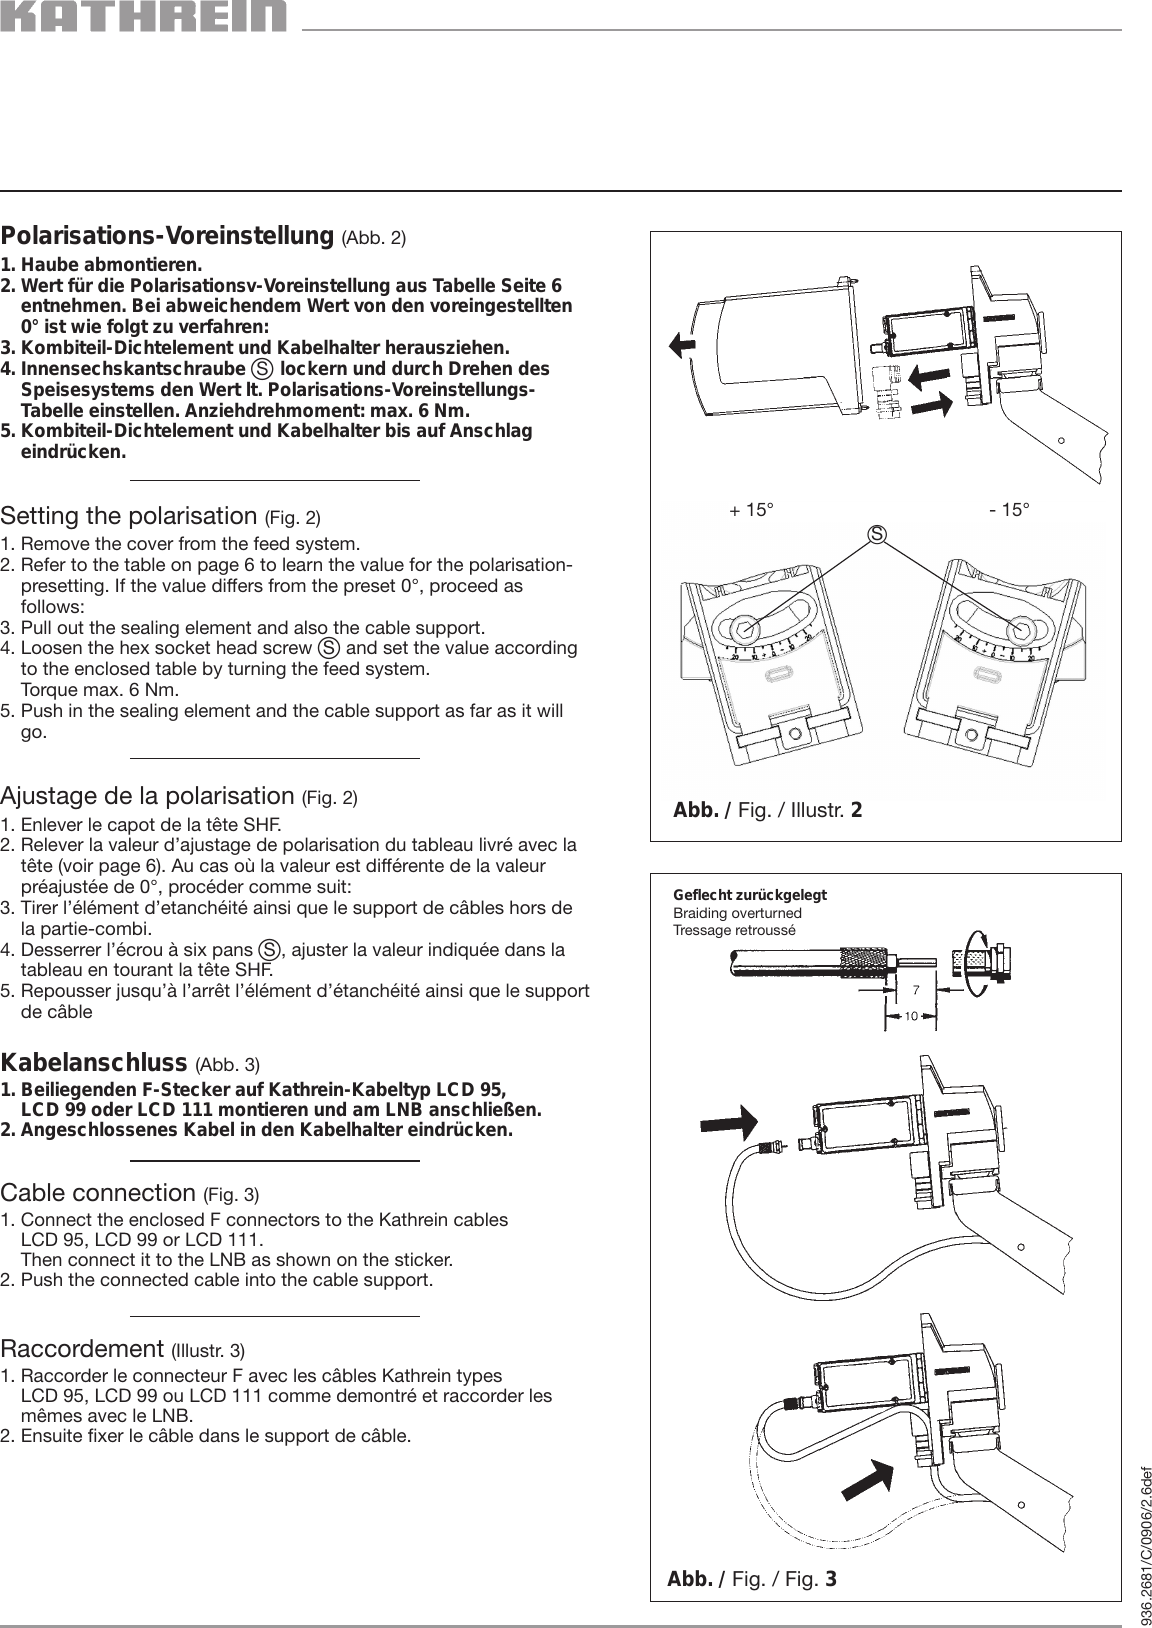 Page 2 of 6 - Kathrein Kathrein-Universal-Feed-Systems-Uas-177-Users-Manual- 9362681c, Universal-Speisesystem Mit 1 Ausgang UAS 177  Kathrein-universal-feed-systems-uas-177-users-manual